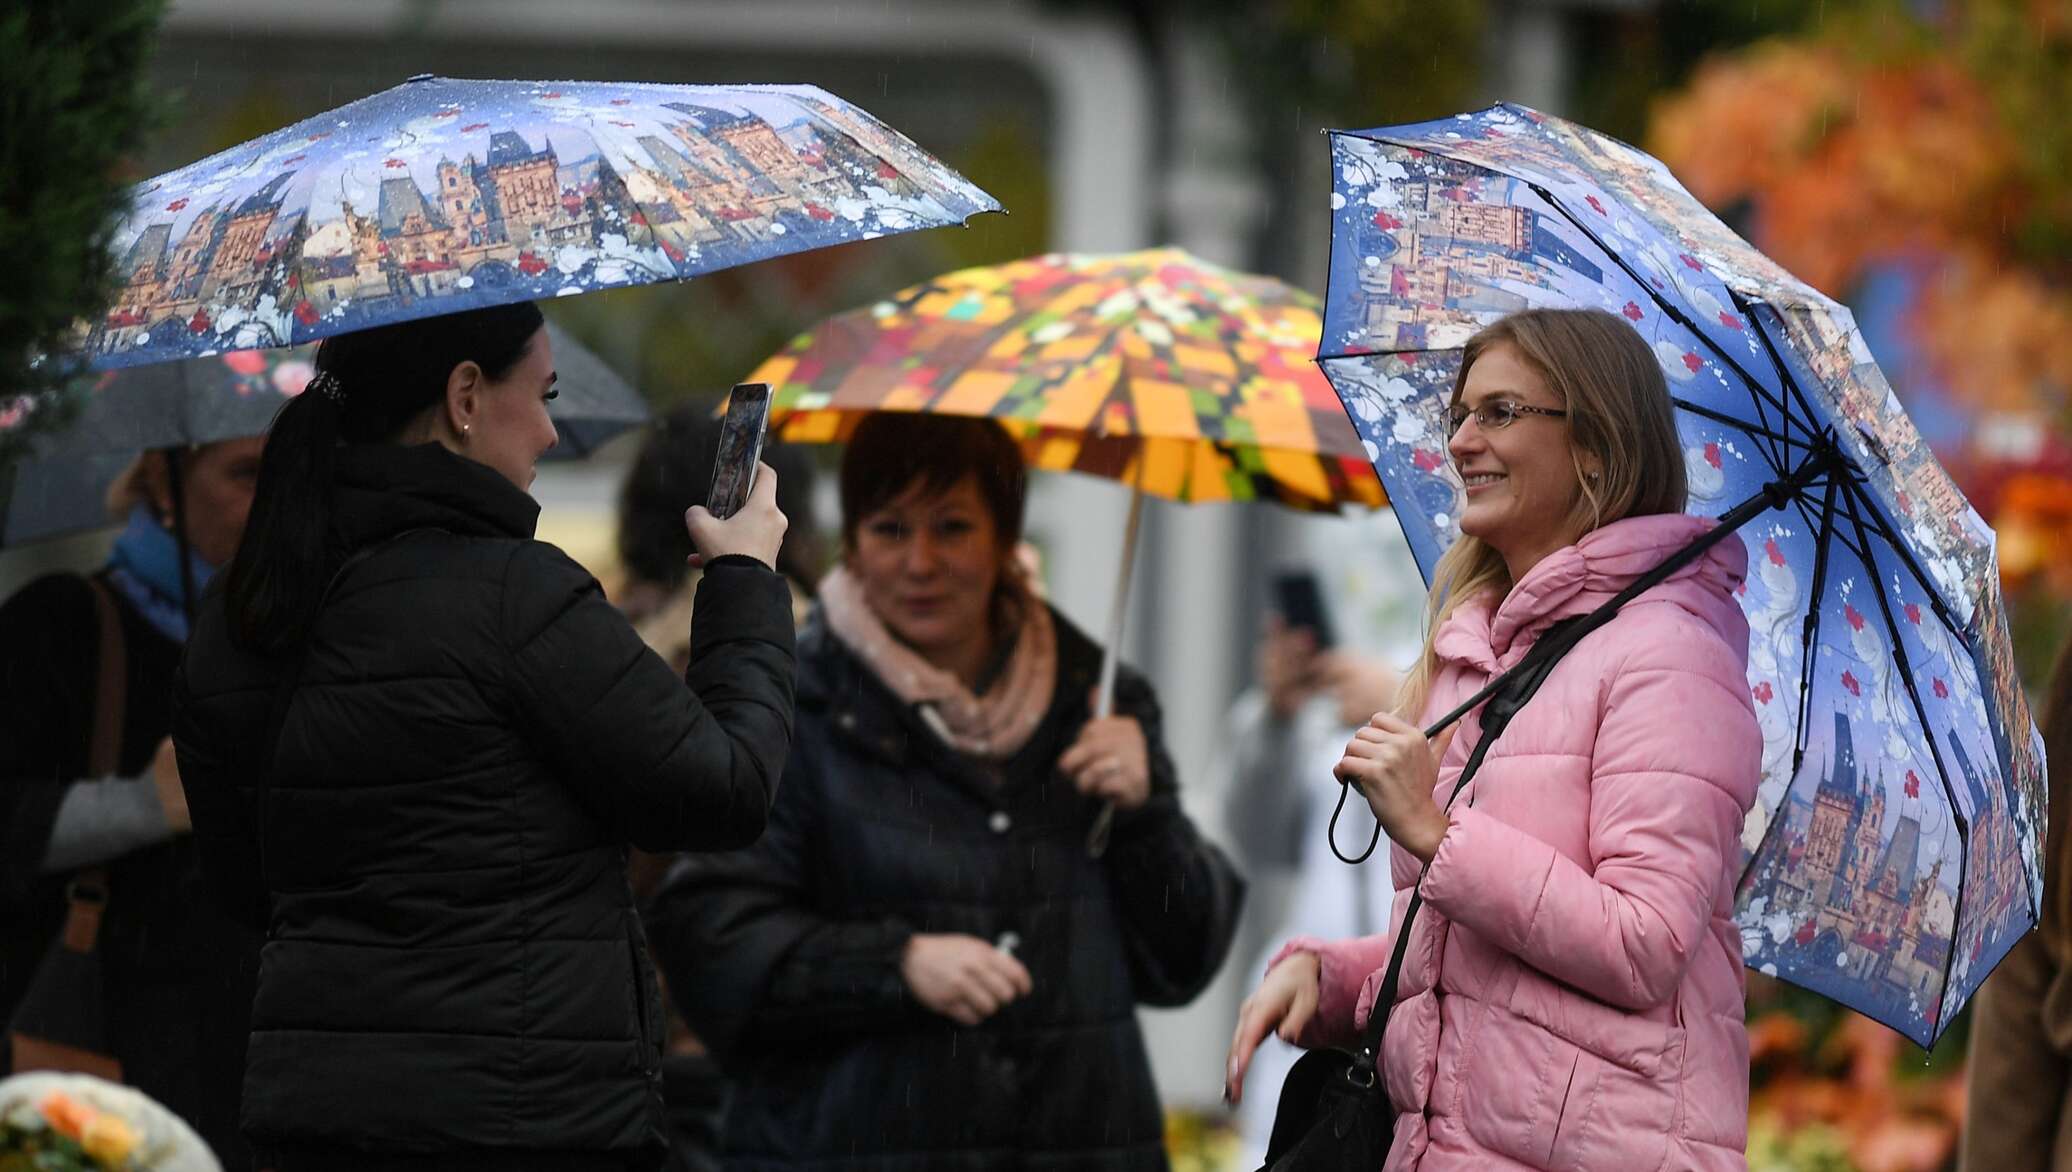 Улица с зонтиками. Прохожий с зонтиком. Человек с зонтиком. Люди с зонтами на улице.